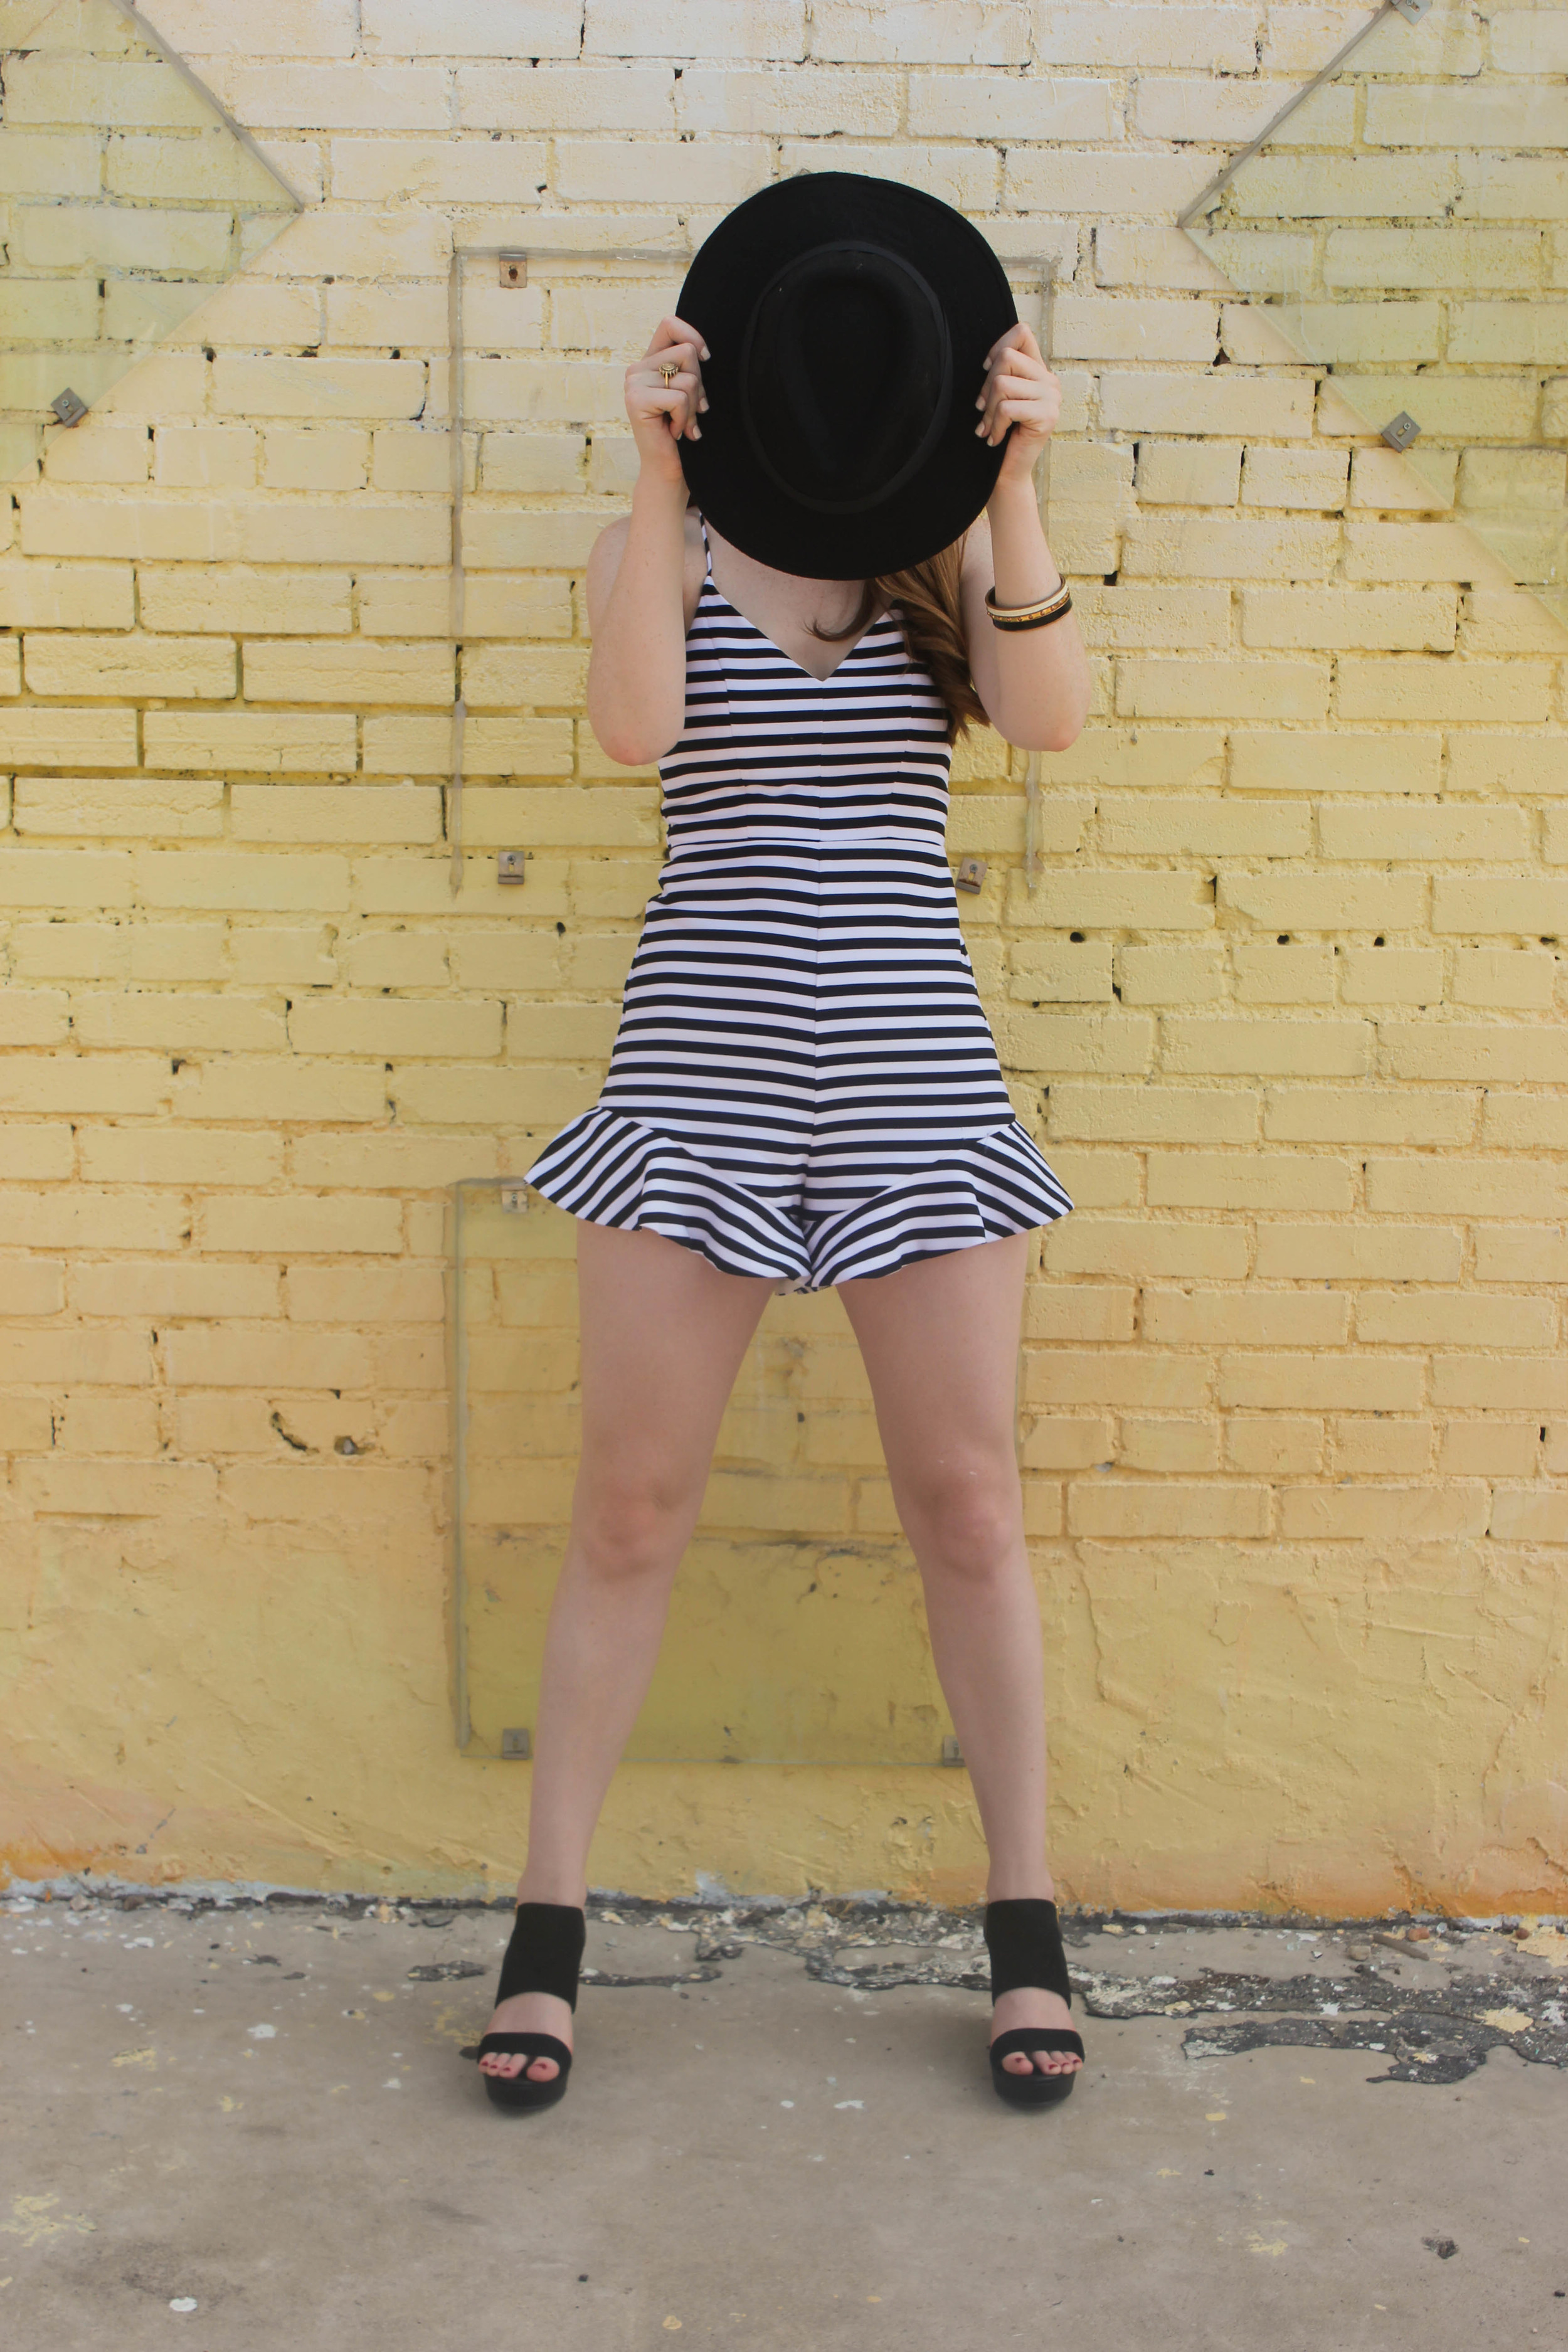 Black and White Romper, Felt Hat | Southern Elle Style | Dallas Fashion Blogger